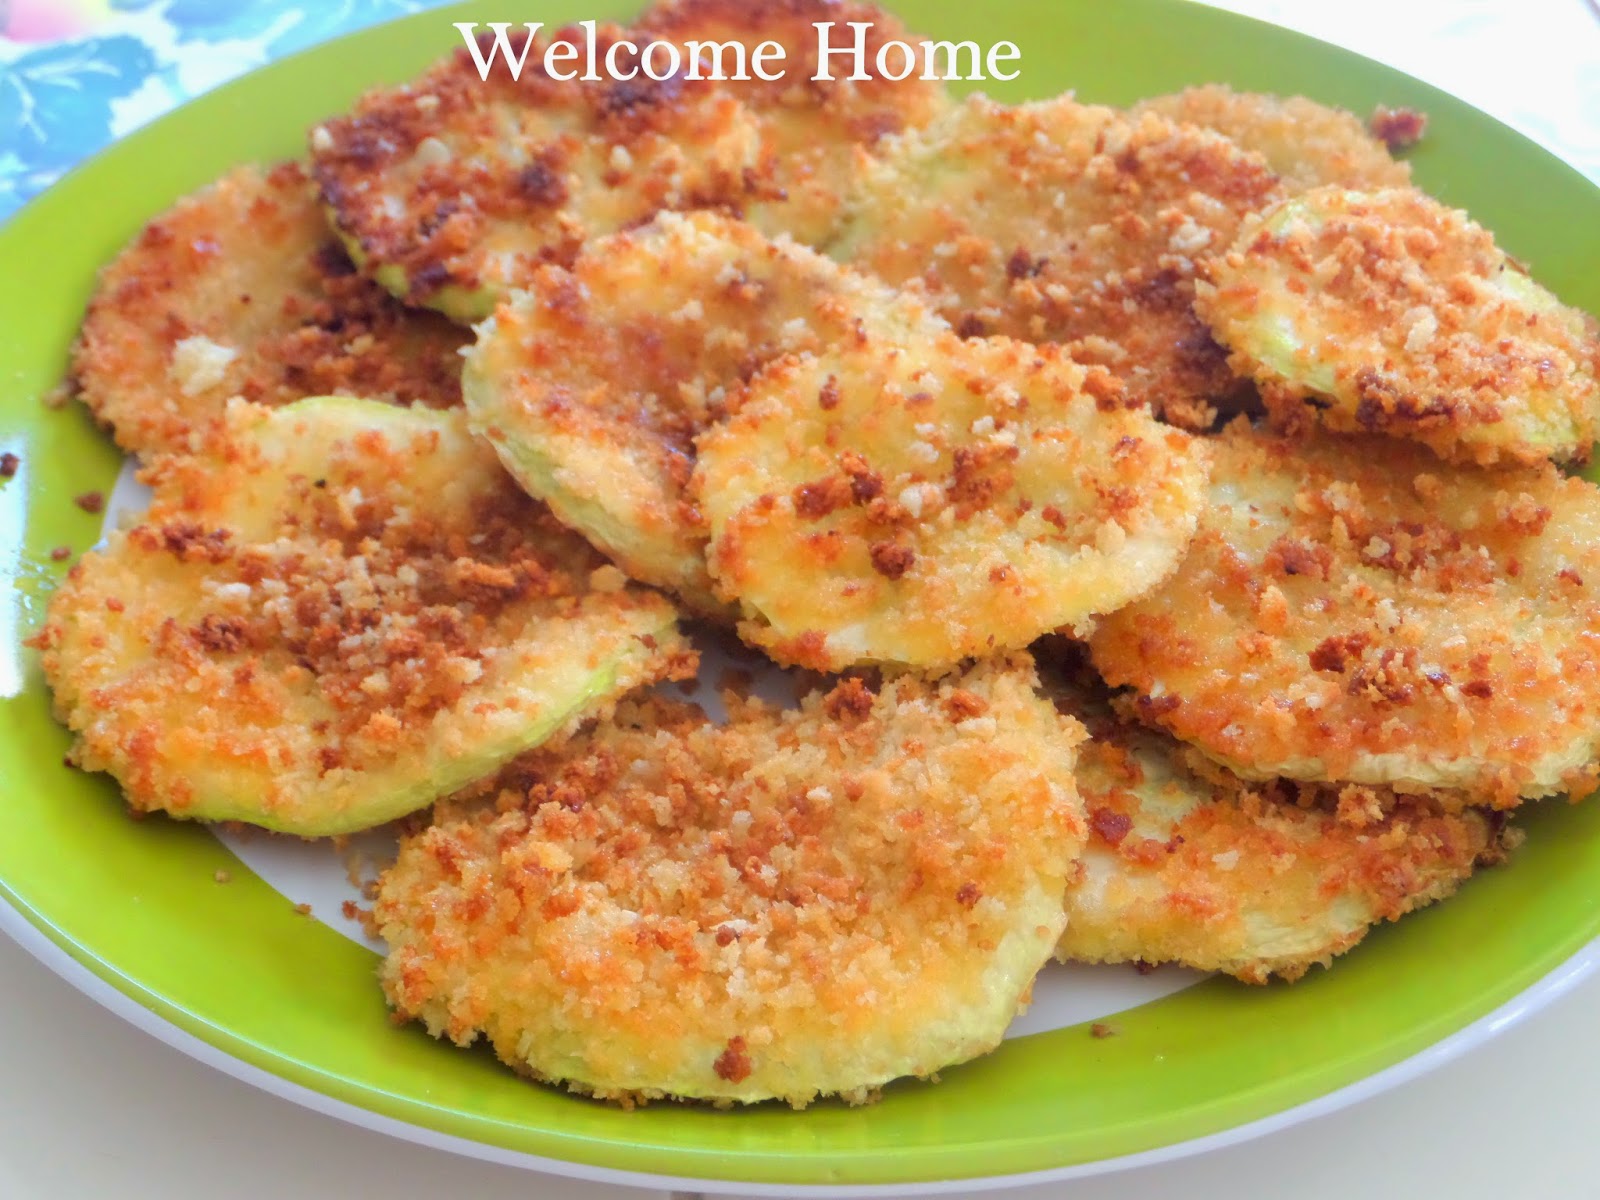 Welcome Home Blog Patty Pan Squash,Lemon Caper Sauce